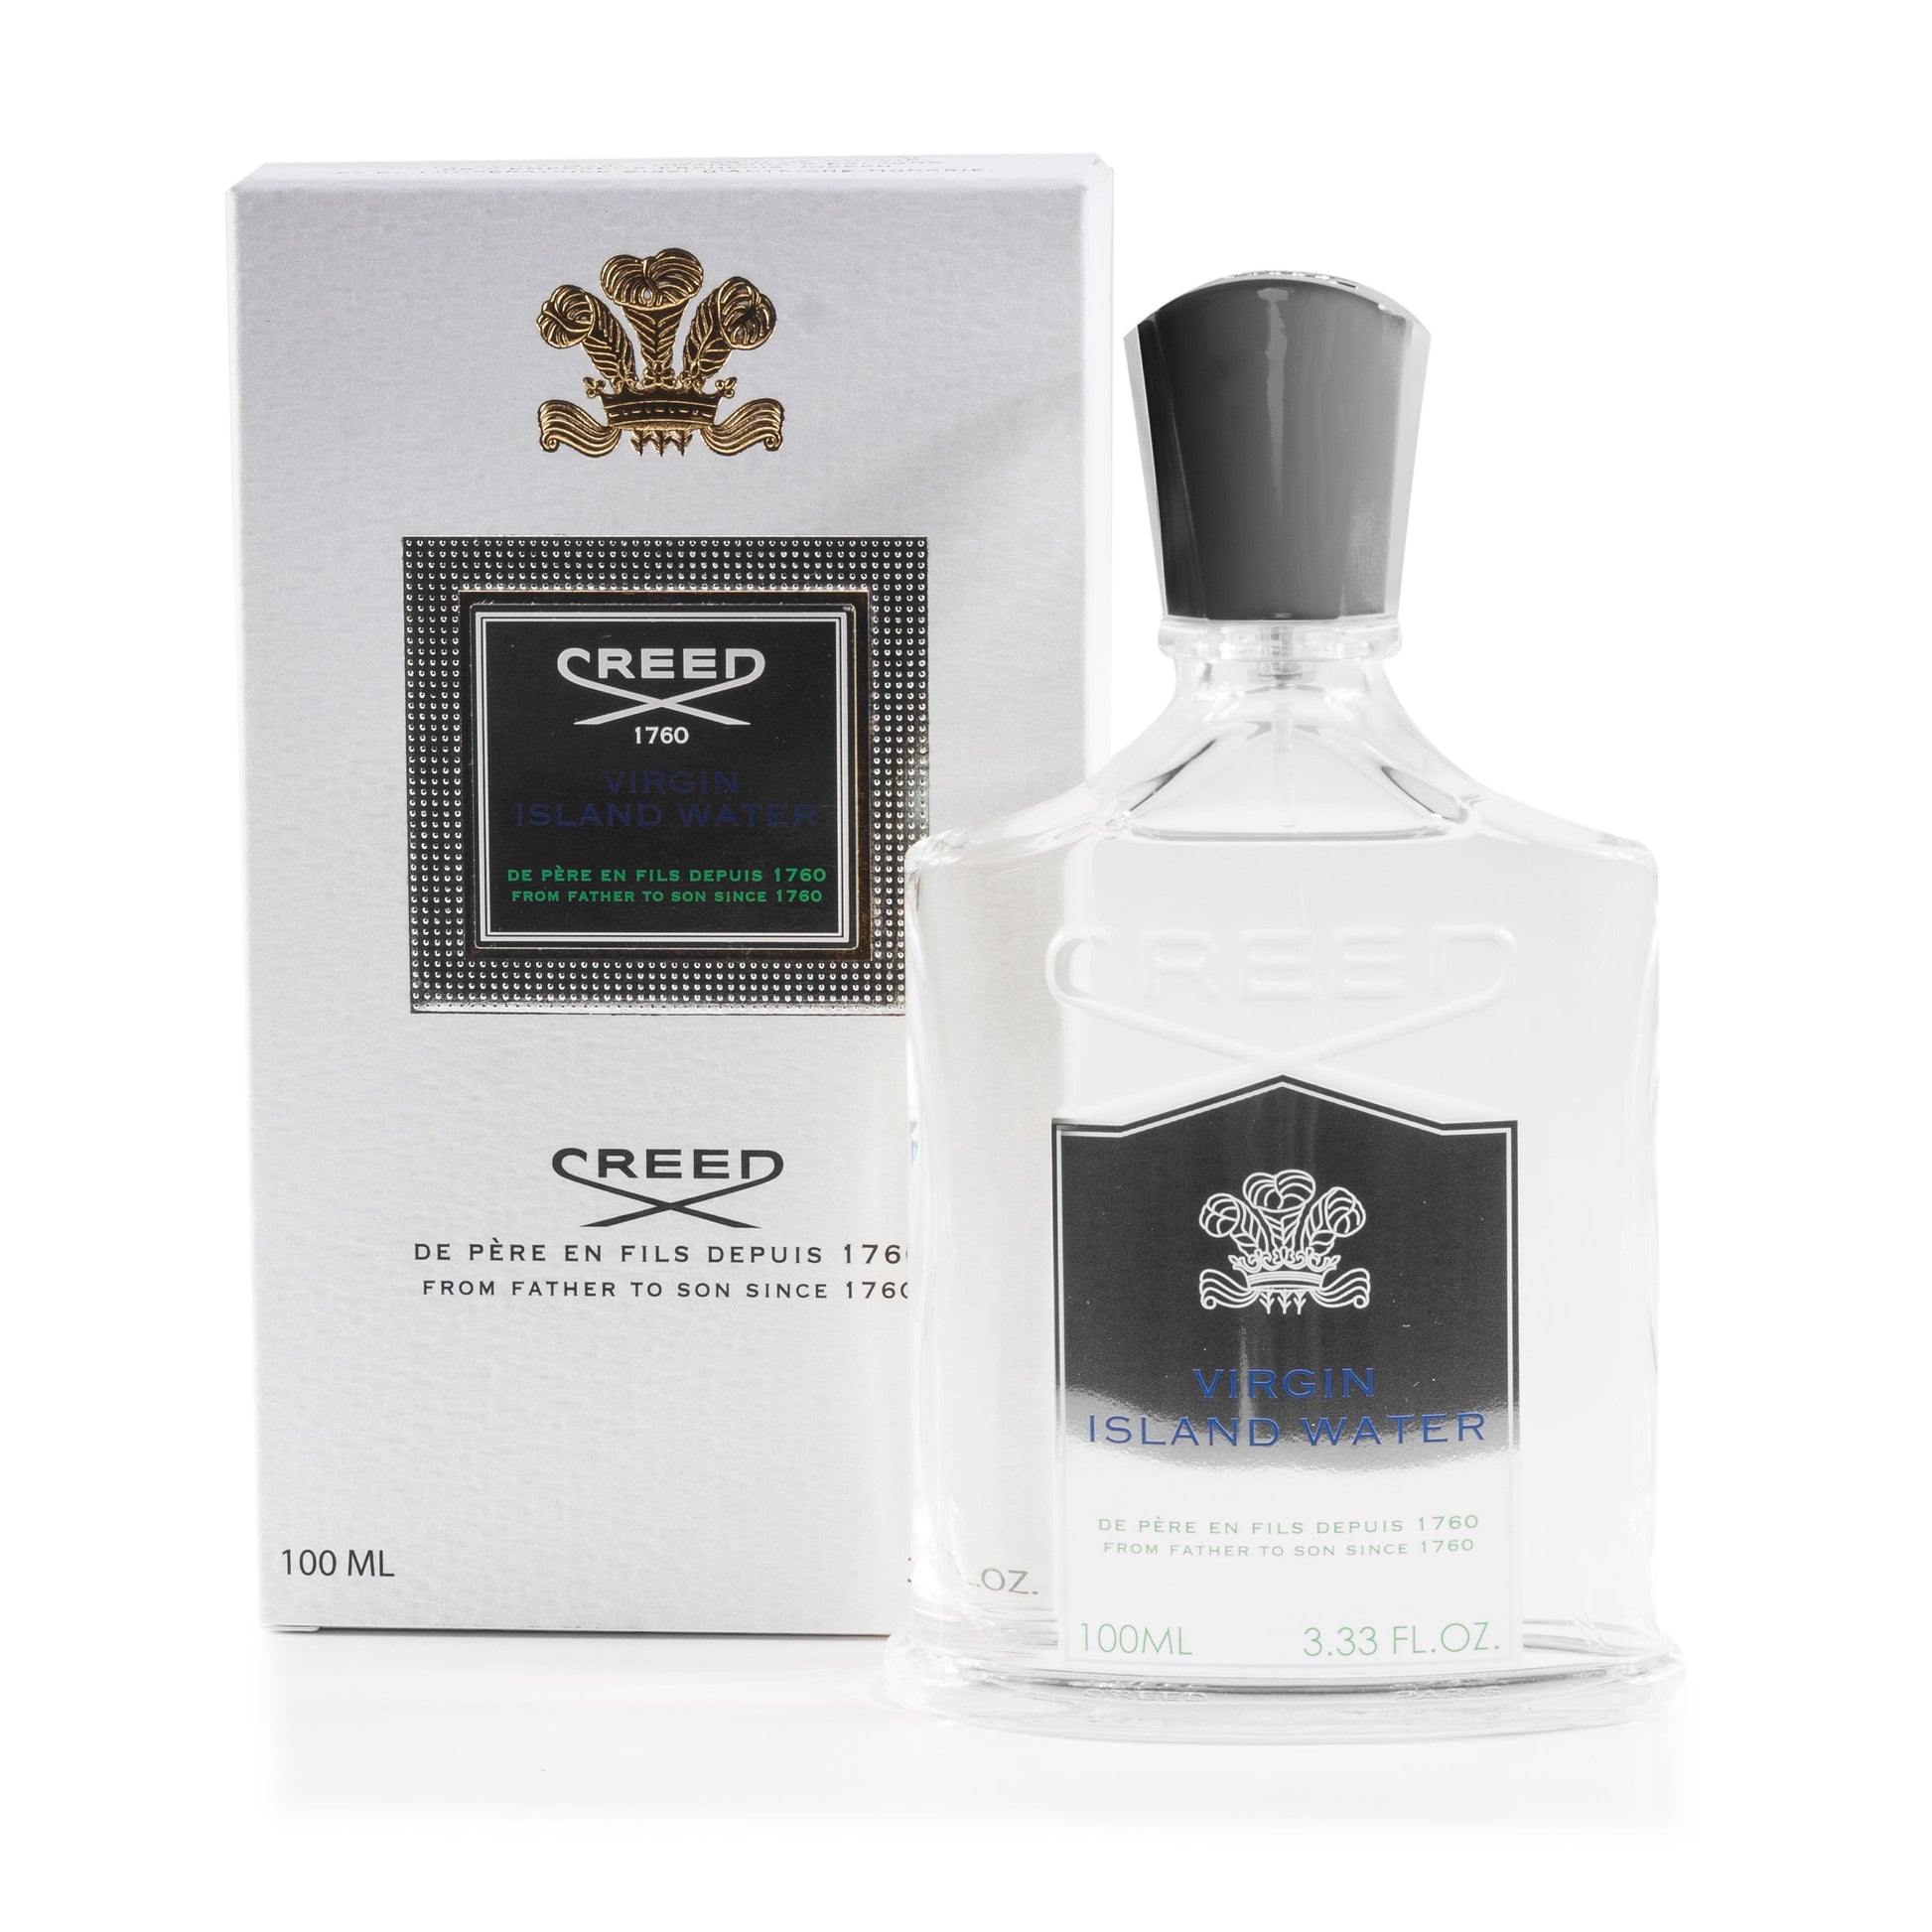 Virgin Island Water Eau de Parfum Spray for Men by Creed, Product image 1